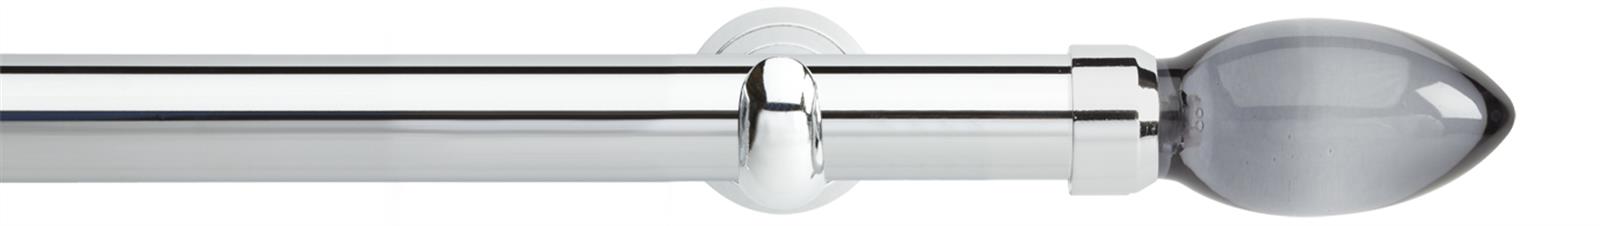 Neo Premium 28mm Eyelet Pole Chrome Cup Smoke Grey Teardrop